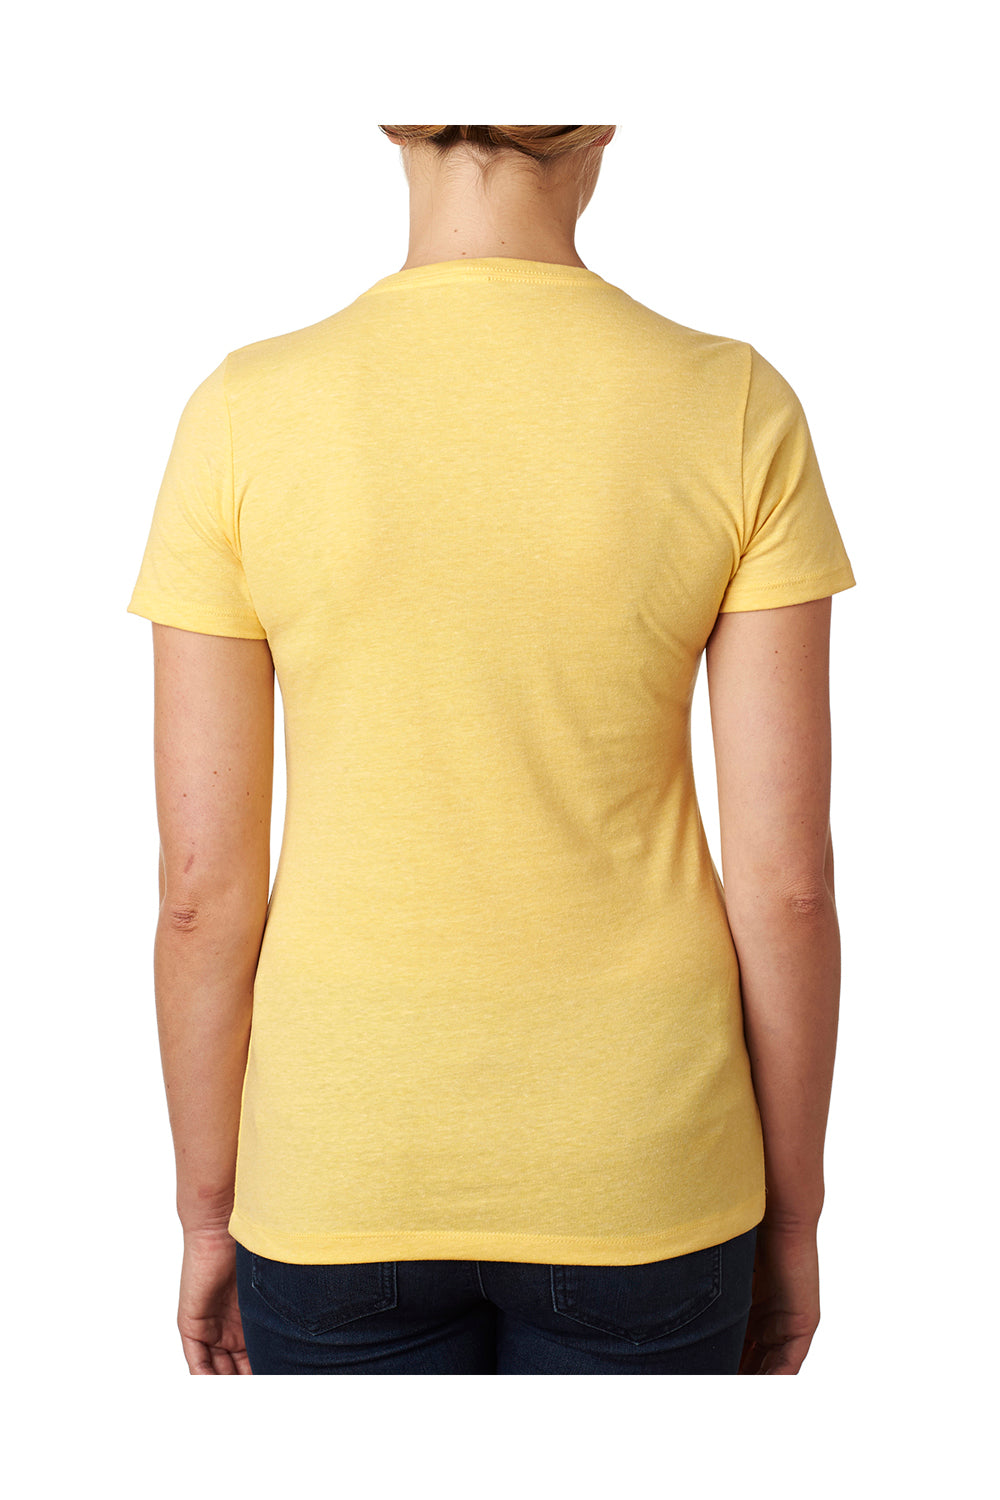 Next Level 6610 Womens CVC Jersey Short Sleeve Crewneck T-Shirt Yellow Back